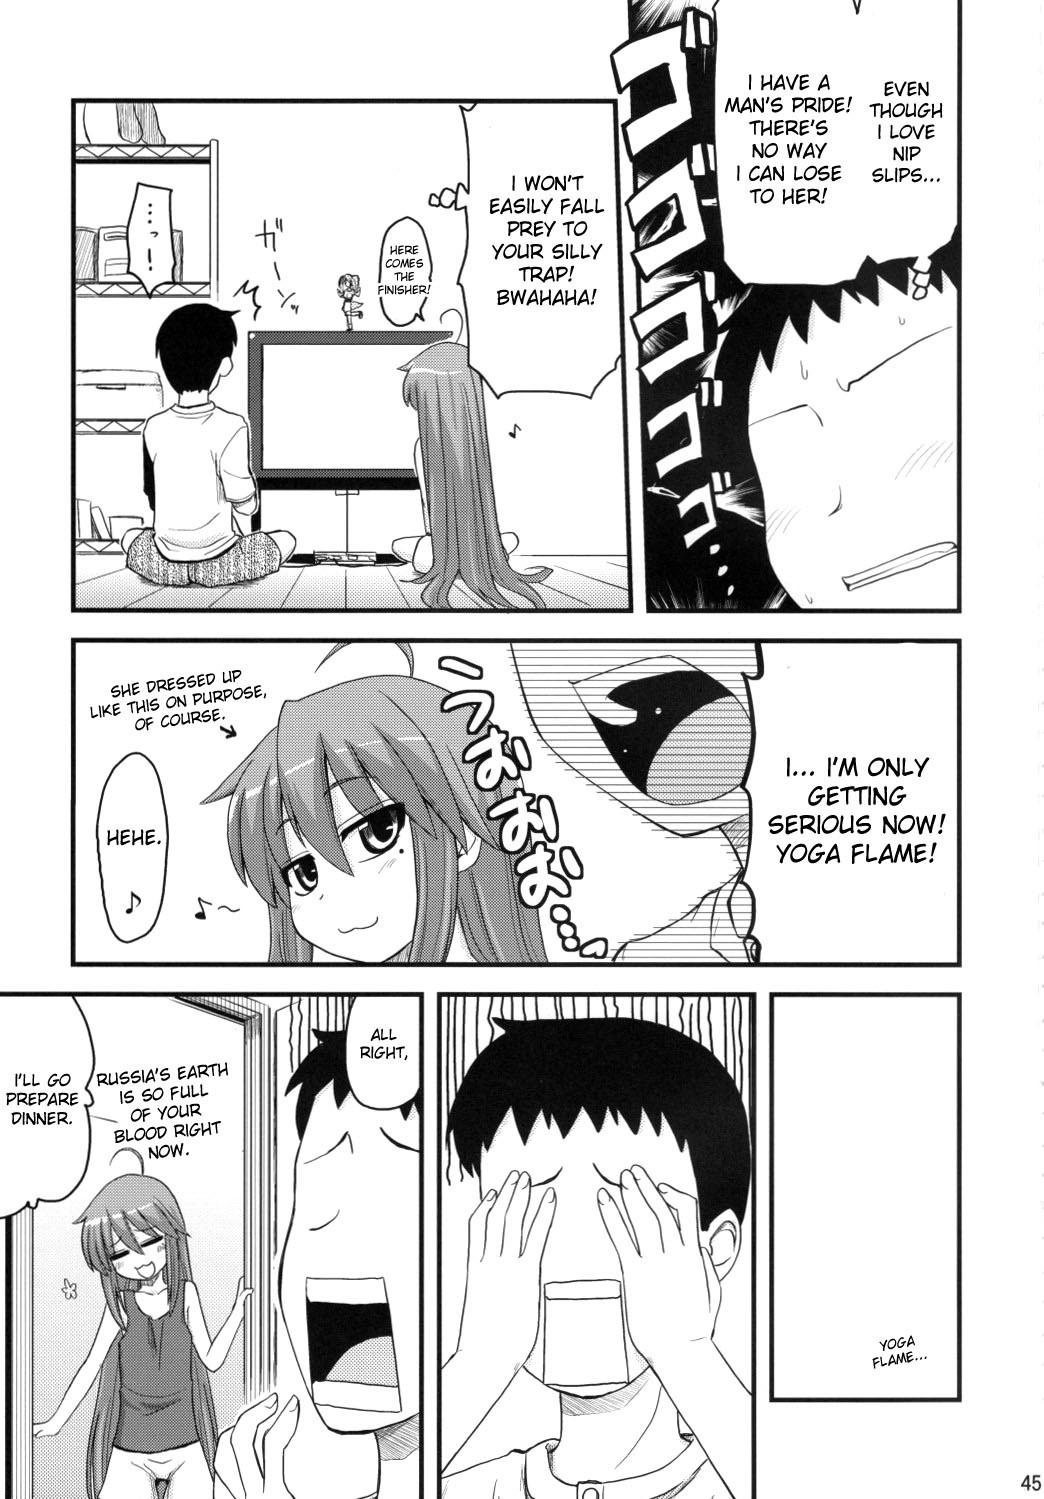 Konata and Oh-zu 4 people each and every one + 1 hentai manga picture 41